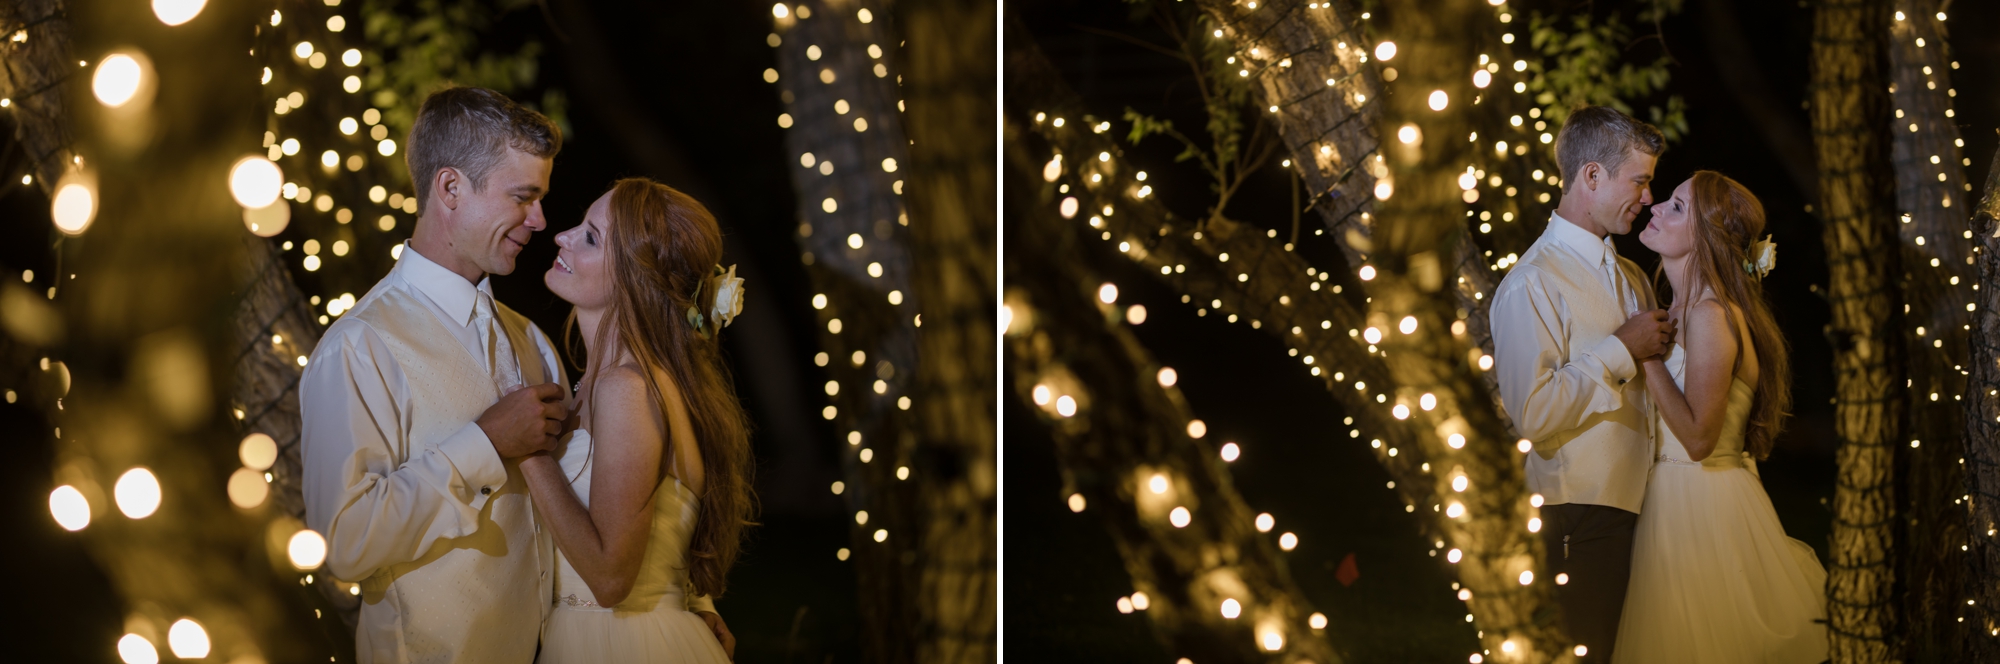 Colorado wedding photographer captures dreamy newlywed portraits